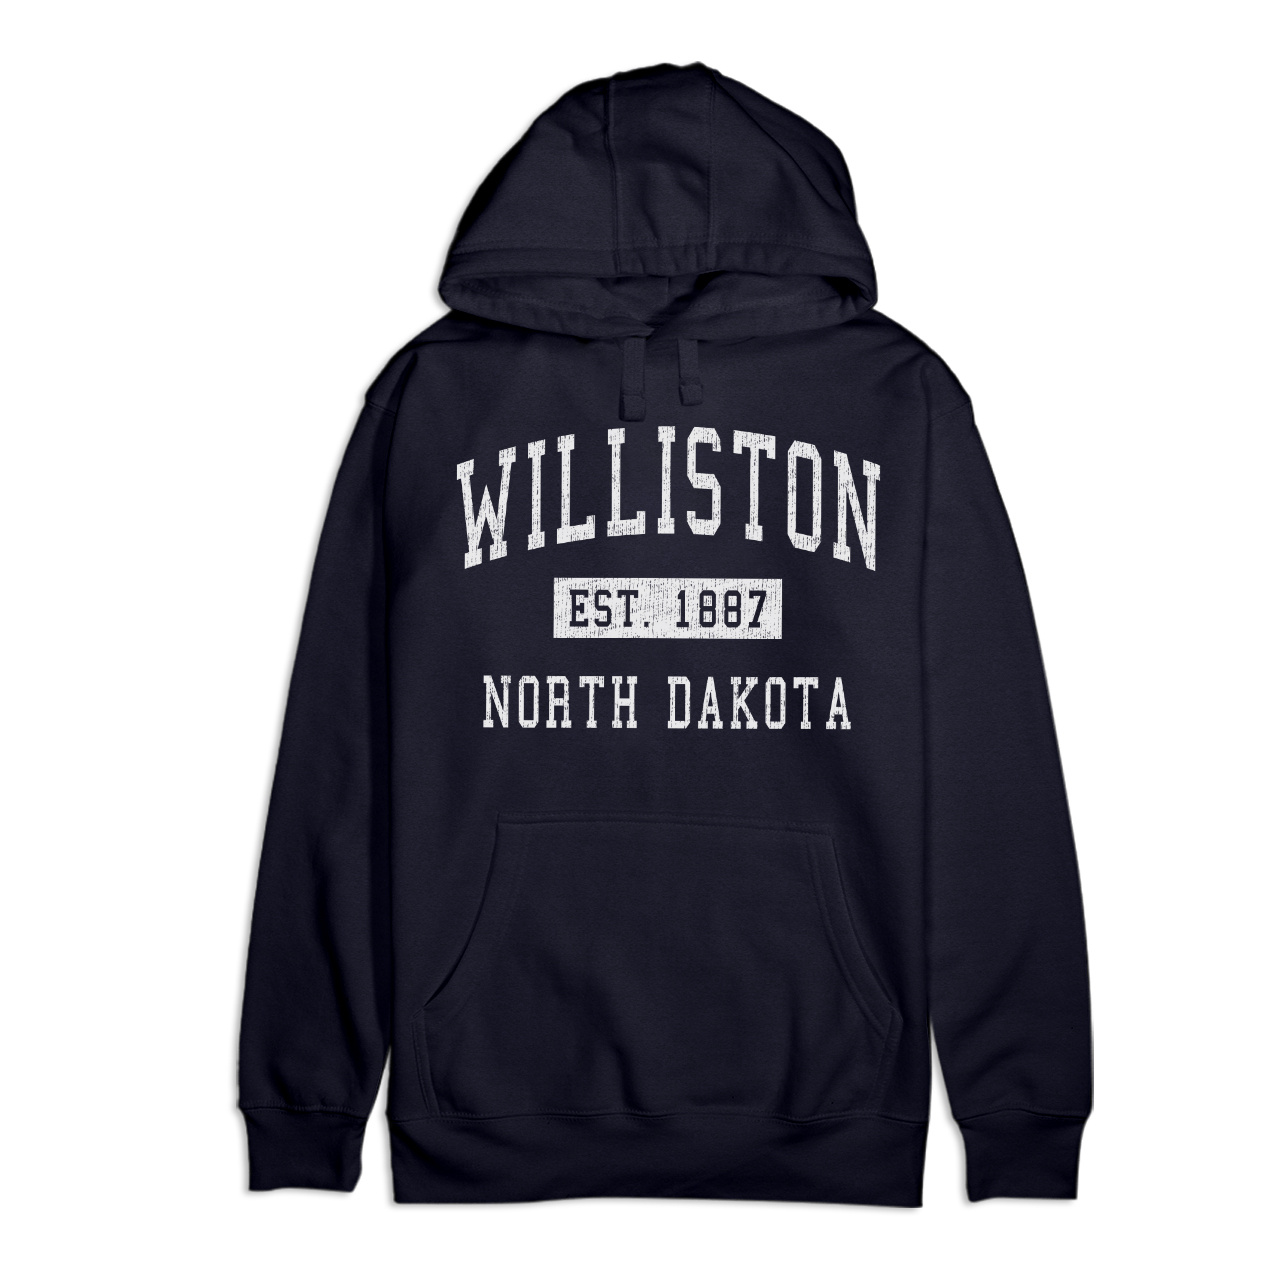 Williston North Dakota Classic Established Premium Cotton Hoodie - image 1 of 1